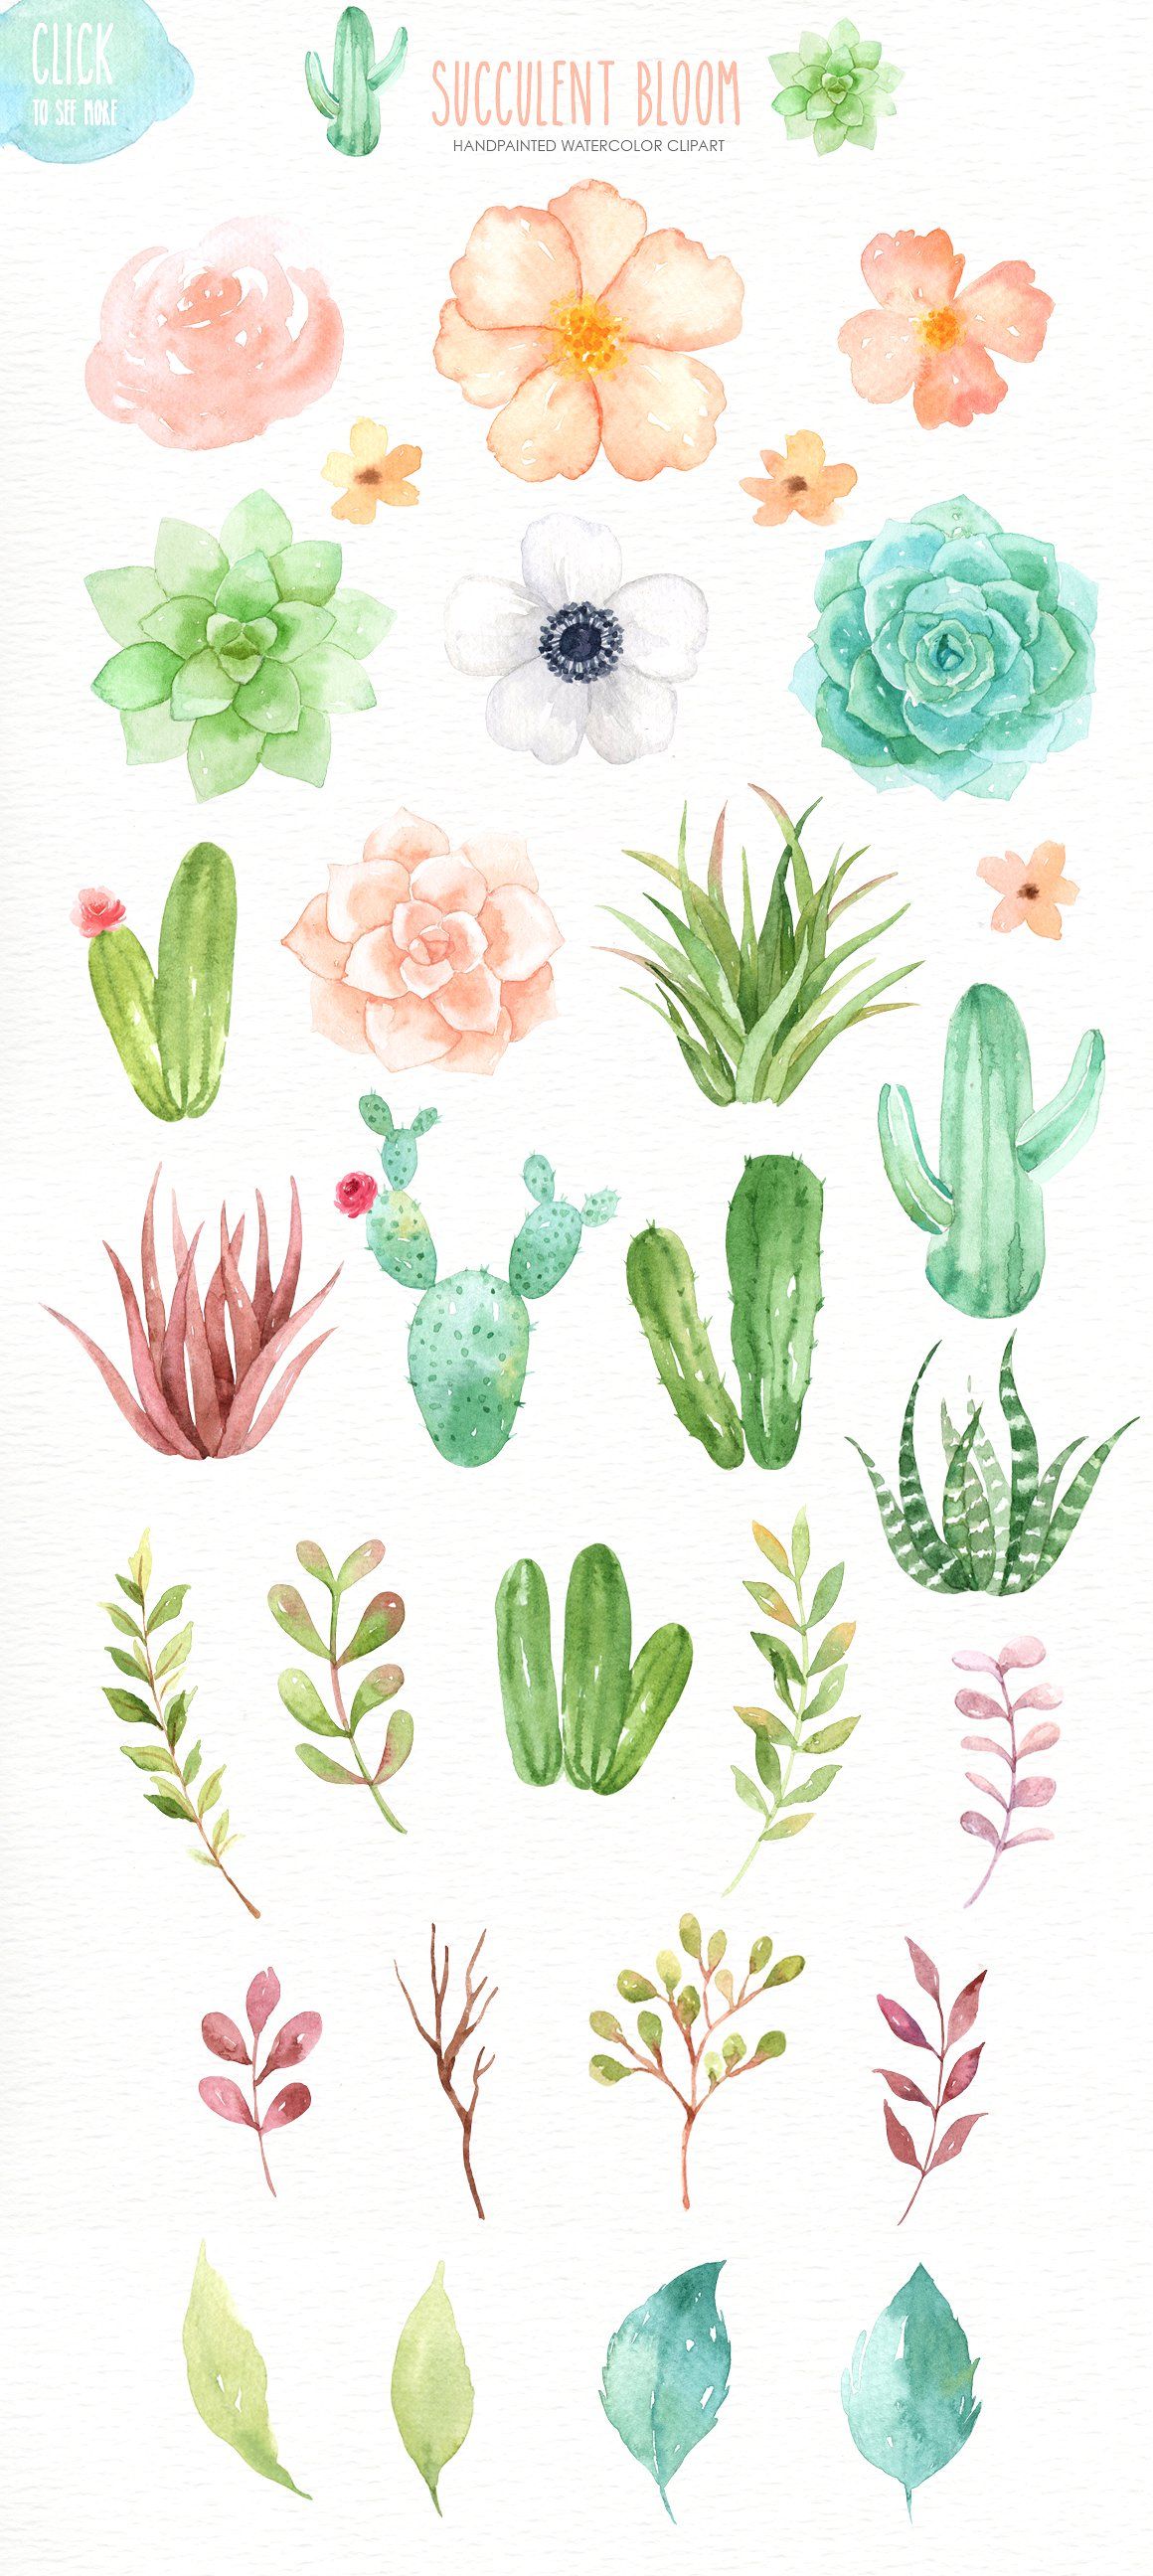 Download Succulent clipart easy watercolor, Succulent easy ...